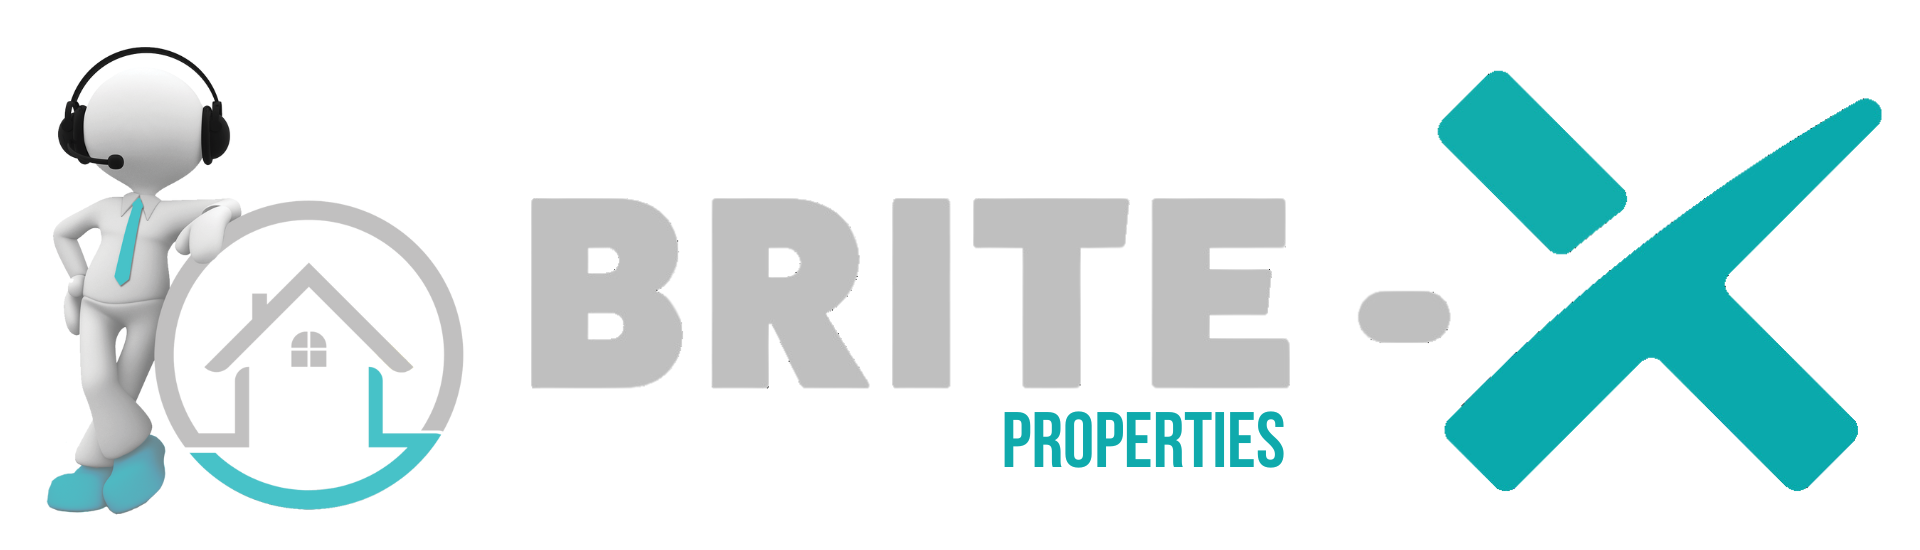 Properties - Real Estate Agent Gauteng - BRITE-X Property Group